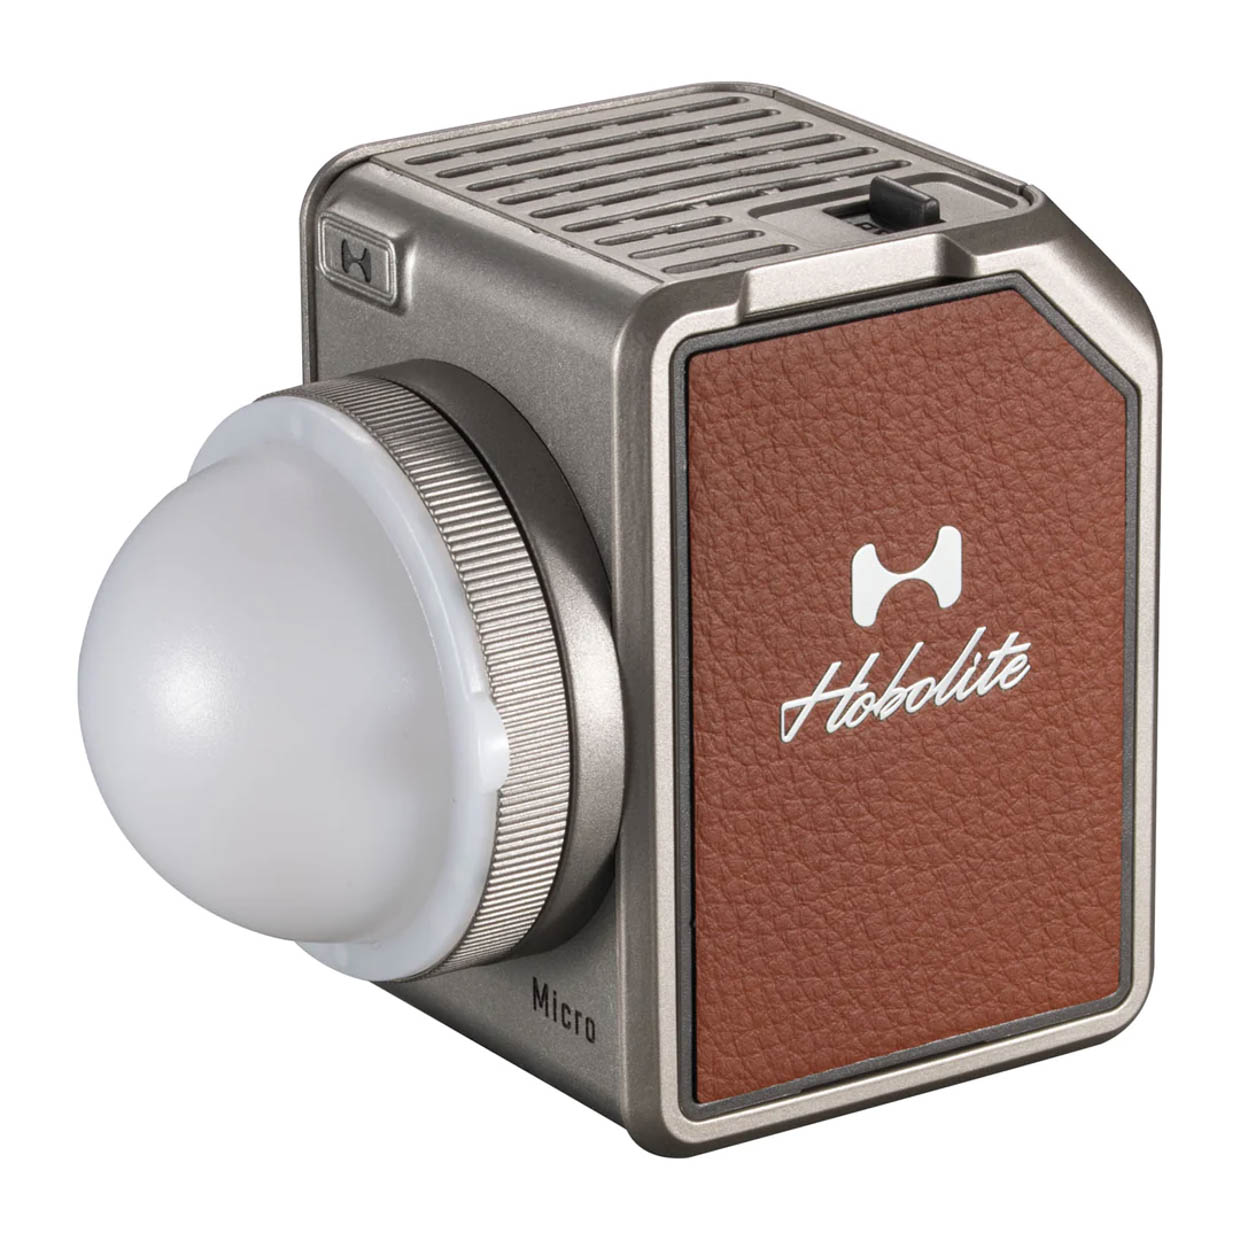 Hobolite Micro LED Video Light